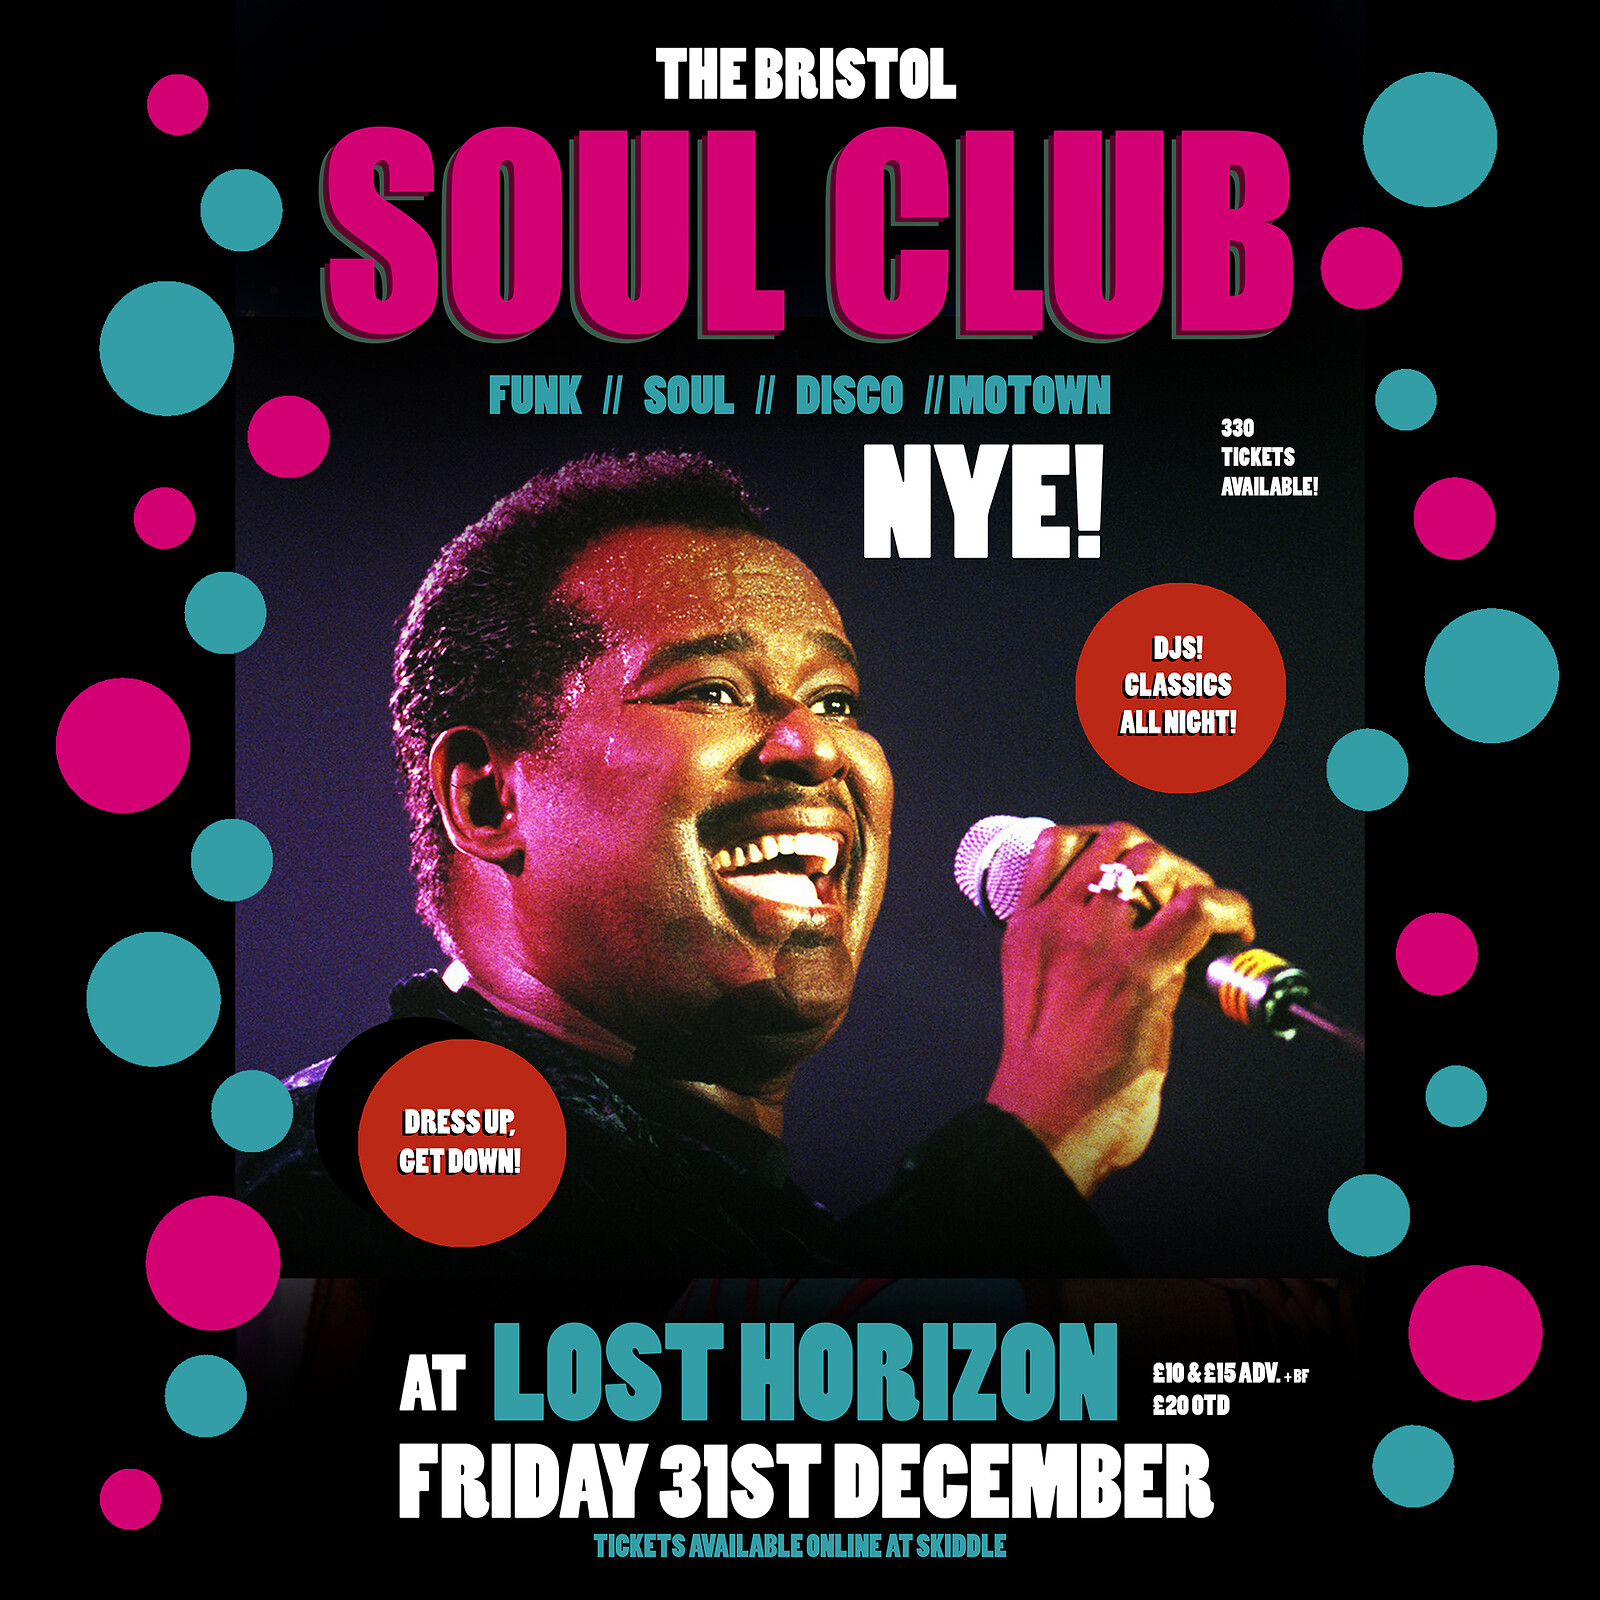 The Bristol Soul Club NYE - Tickets OTD at Lost Horizon